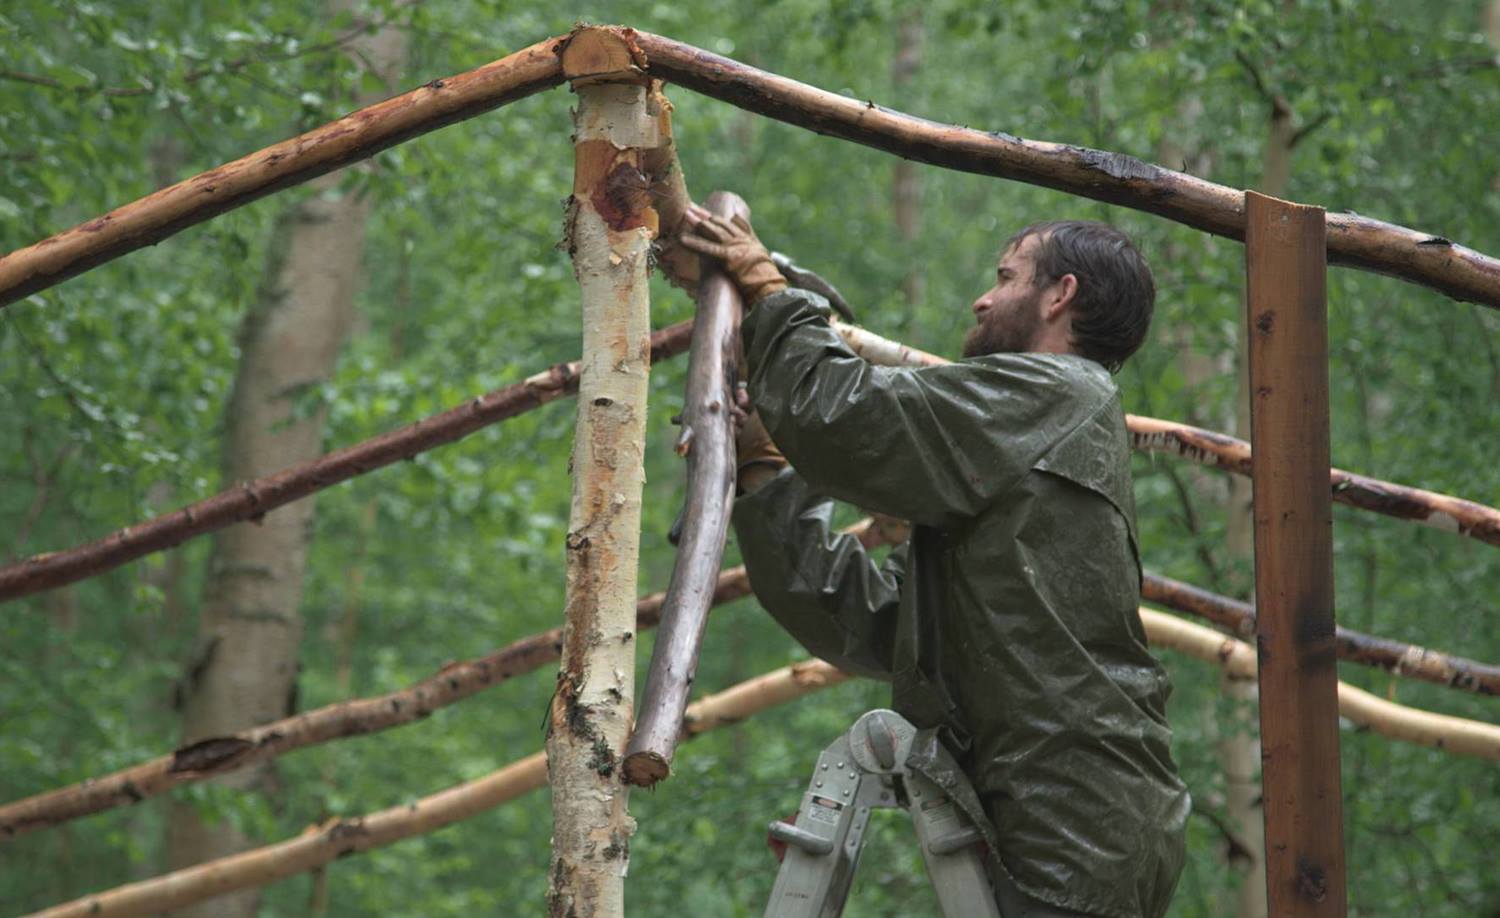 Peter Bird, Audrey's husband, building a birch-tree platform for their outdoor birth. Photo courtesy of Audrey Bird.